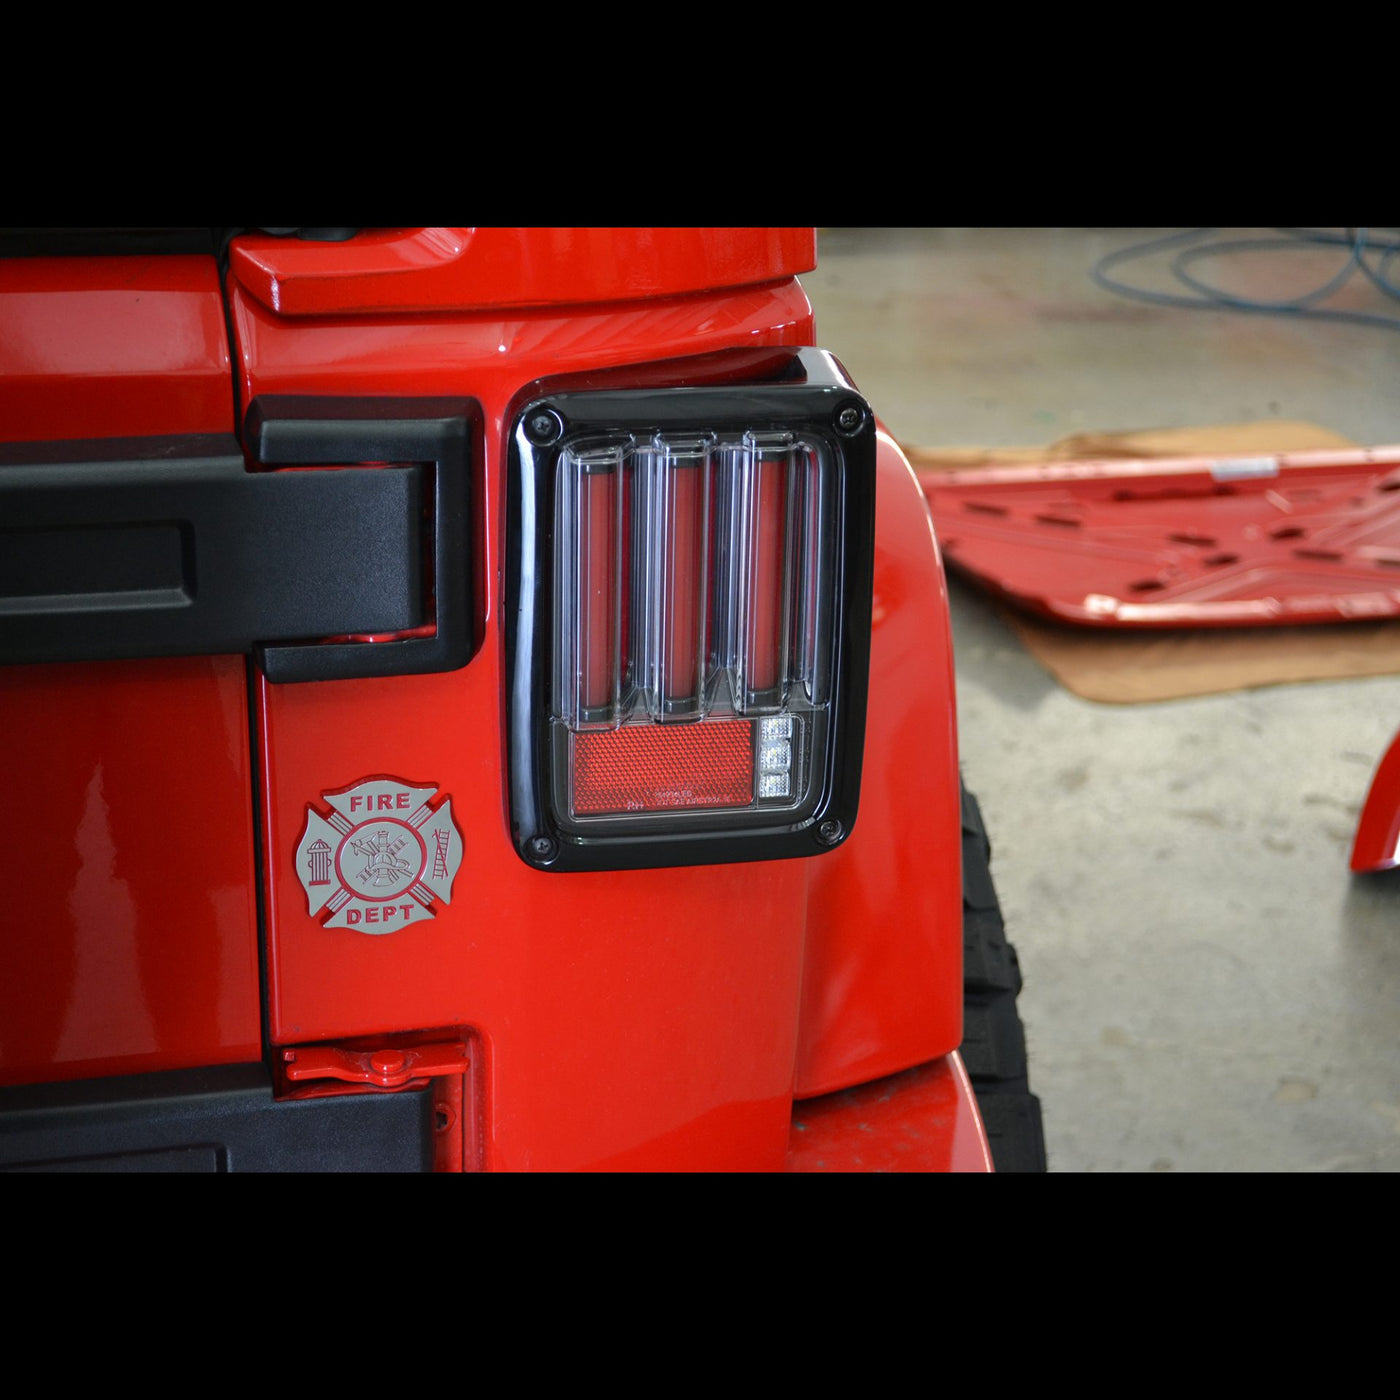 Jeep Tail Lights, Wrangler Tail Lights, Wrangler 07-18 Tail Lights, Smoked Tail Lights, LED Tail Lights, Recon Tail Lights